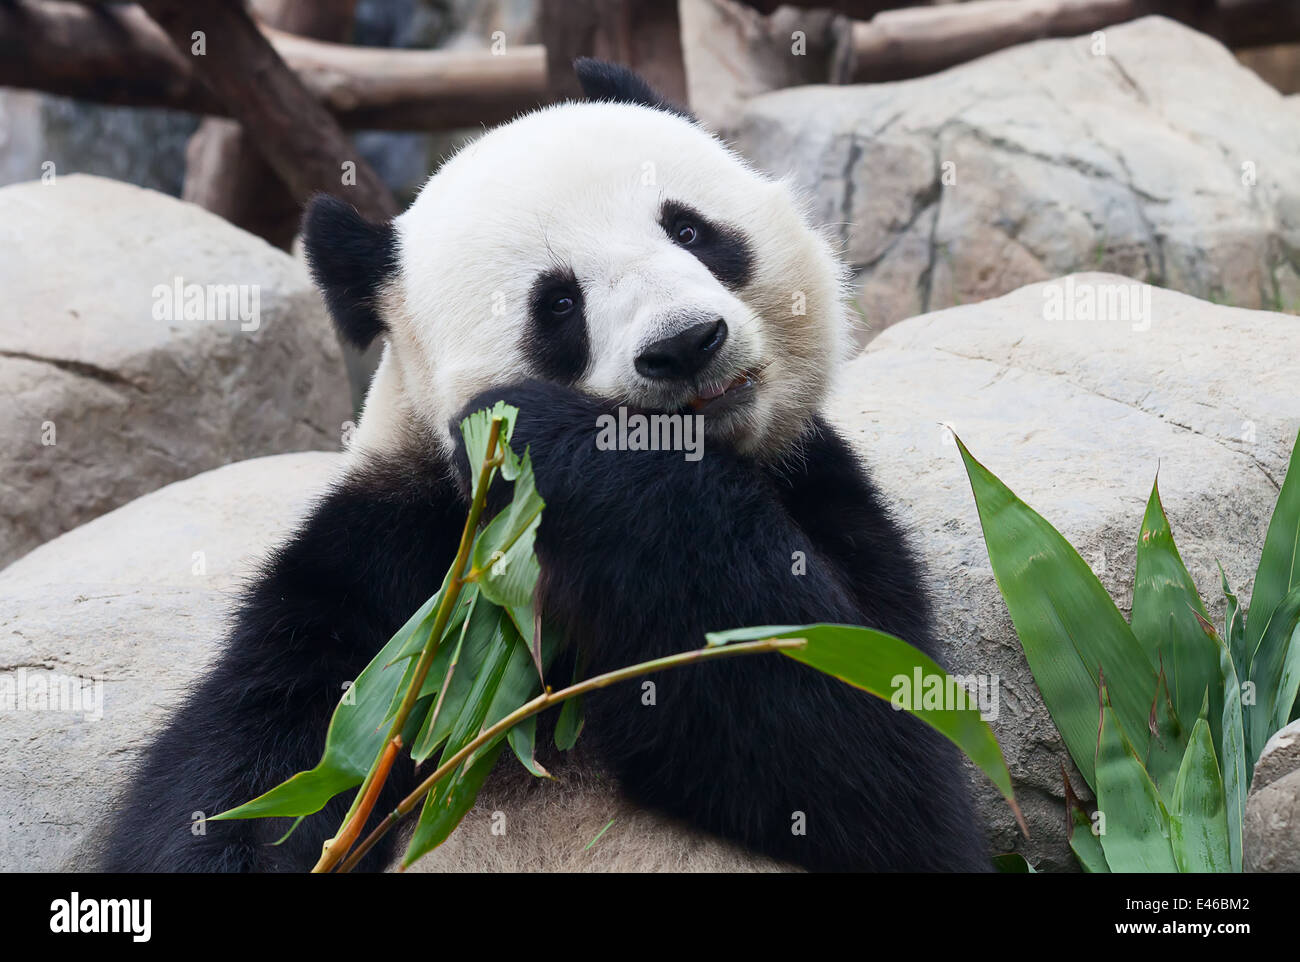 Giant Panda Bear Eating Bamboo Leafs Stock Photo Alamy